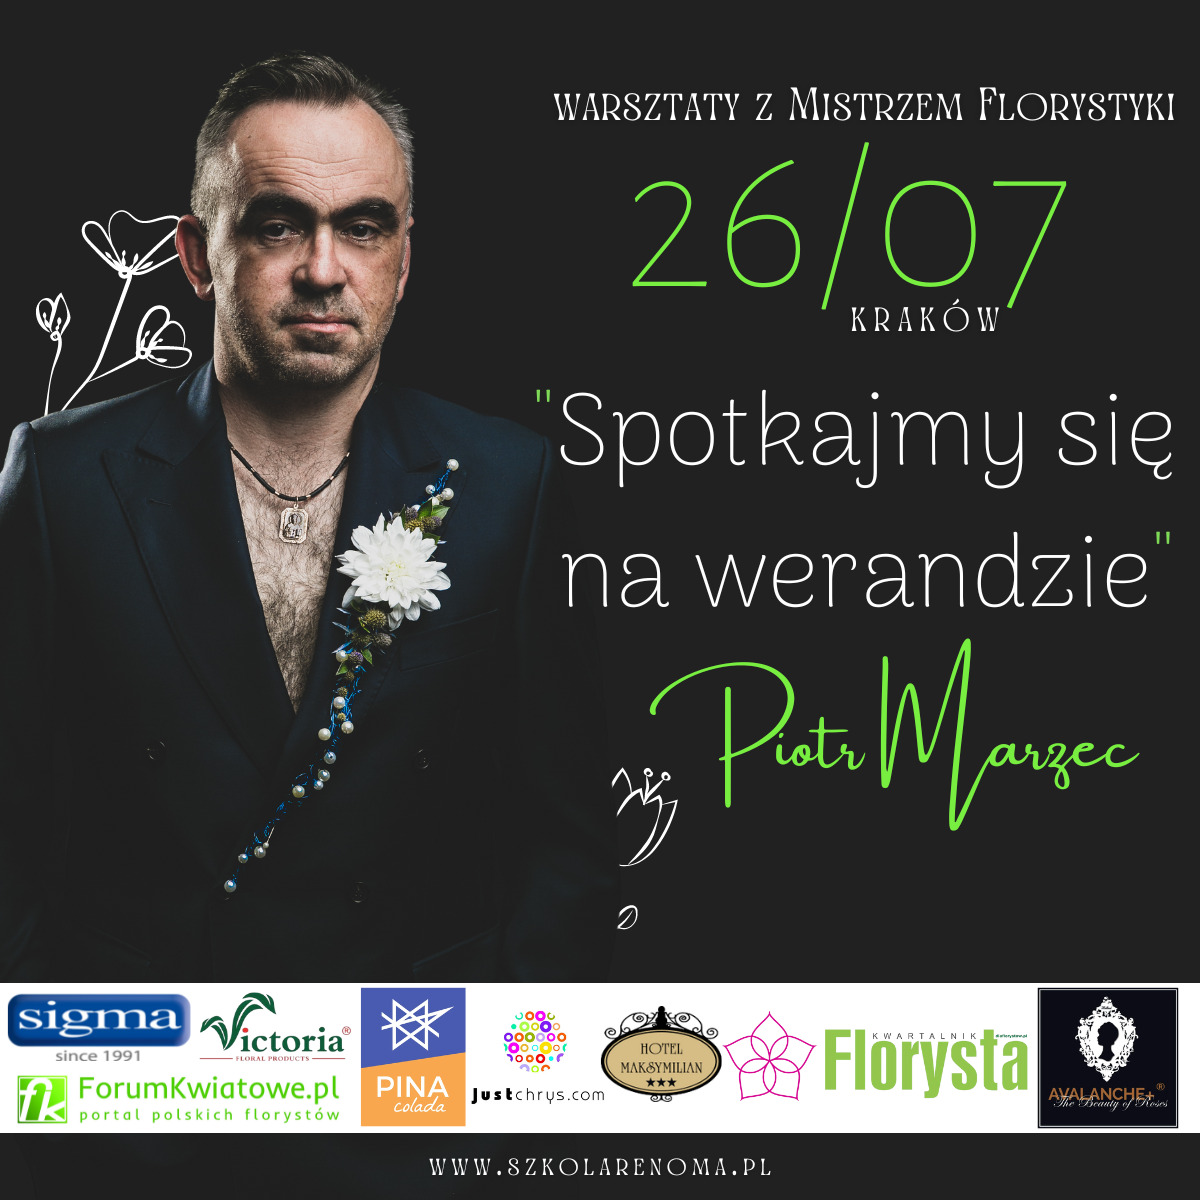 Piotr Marzec